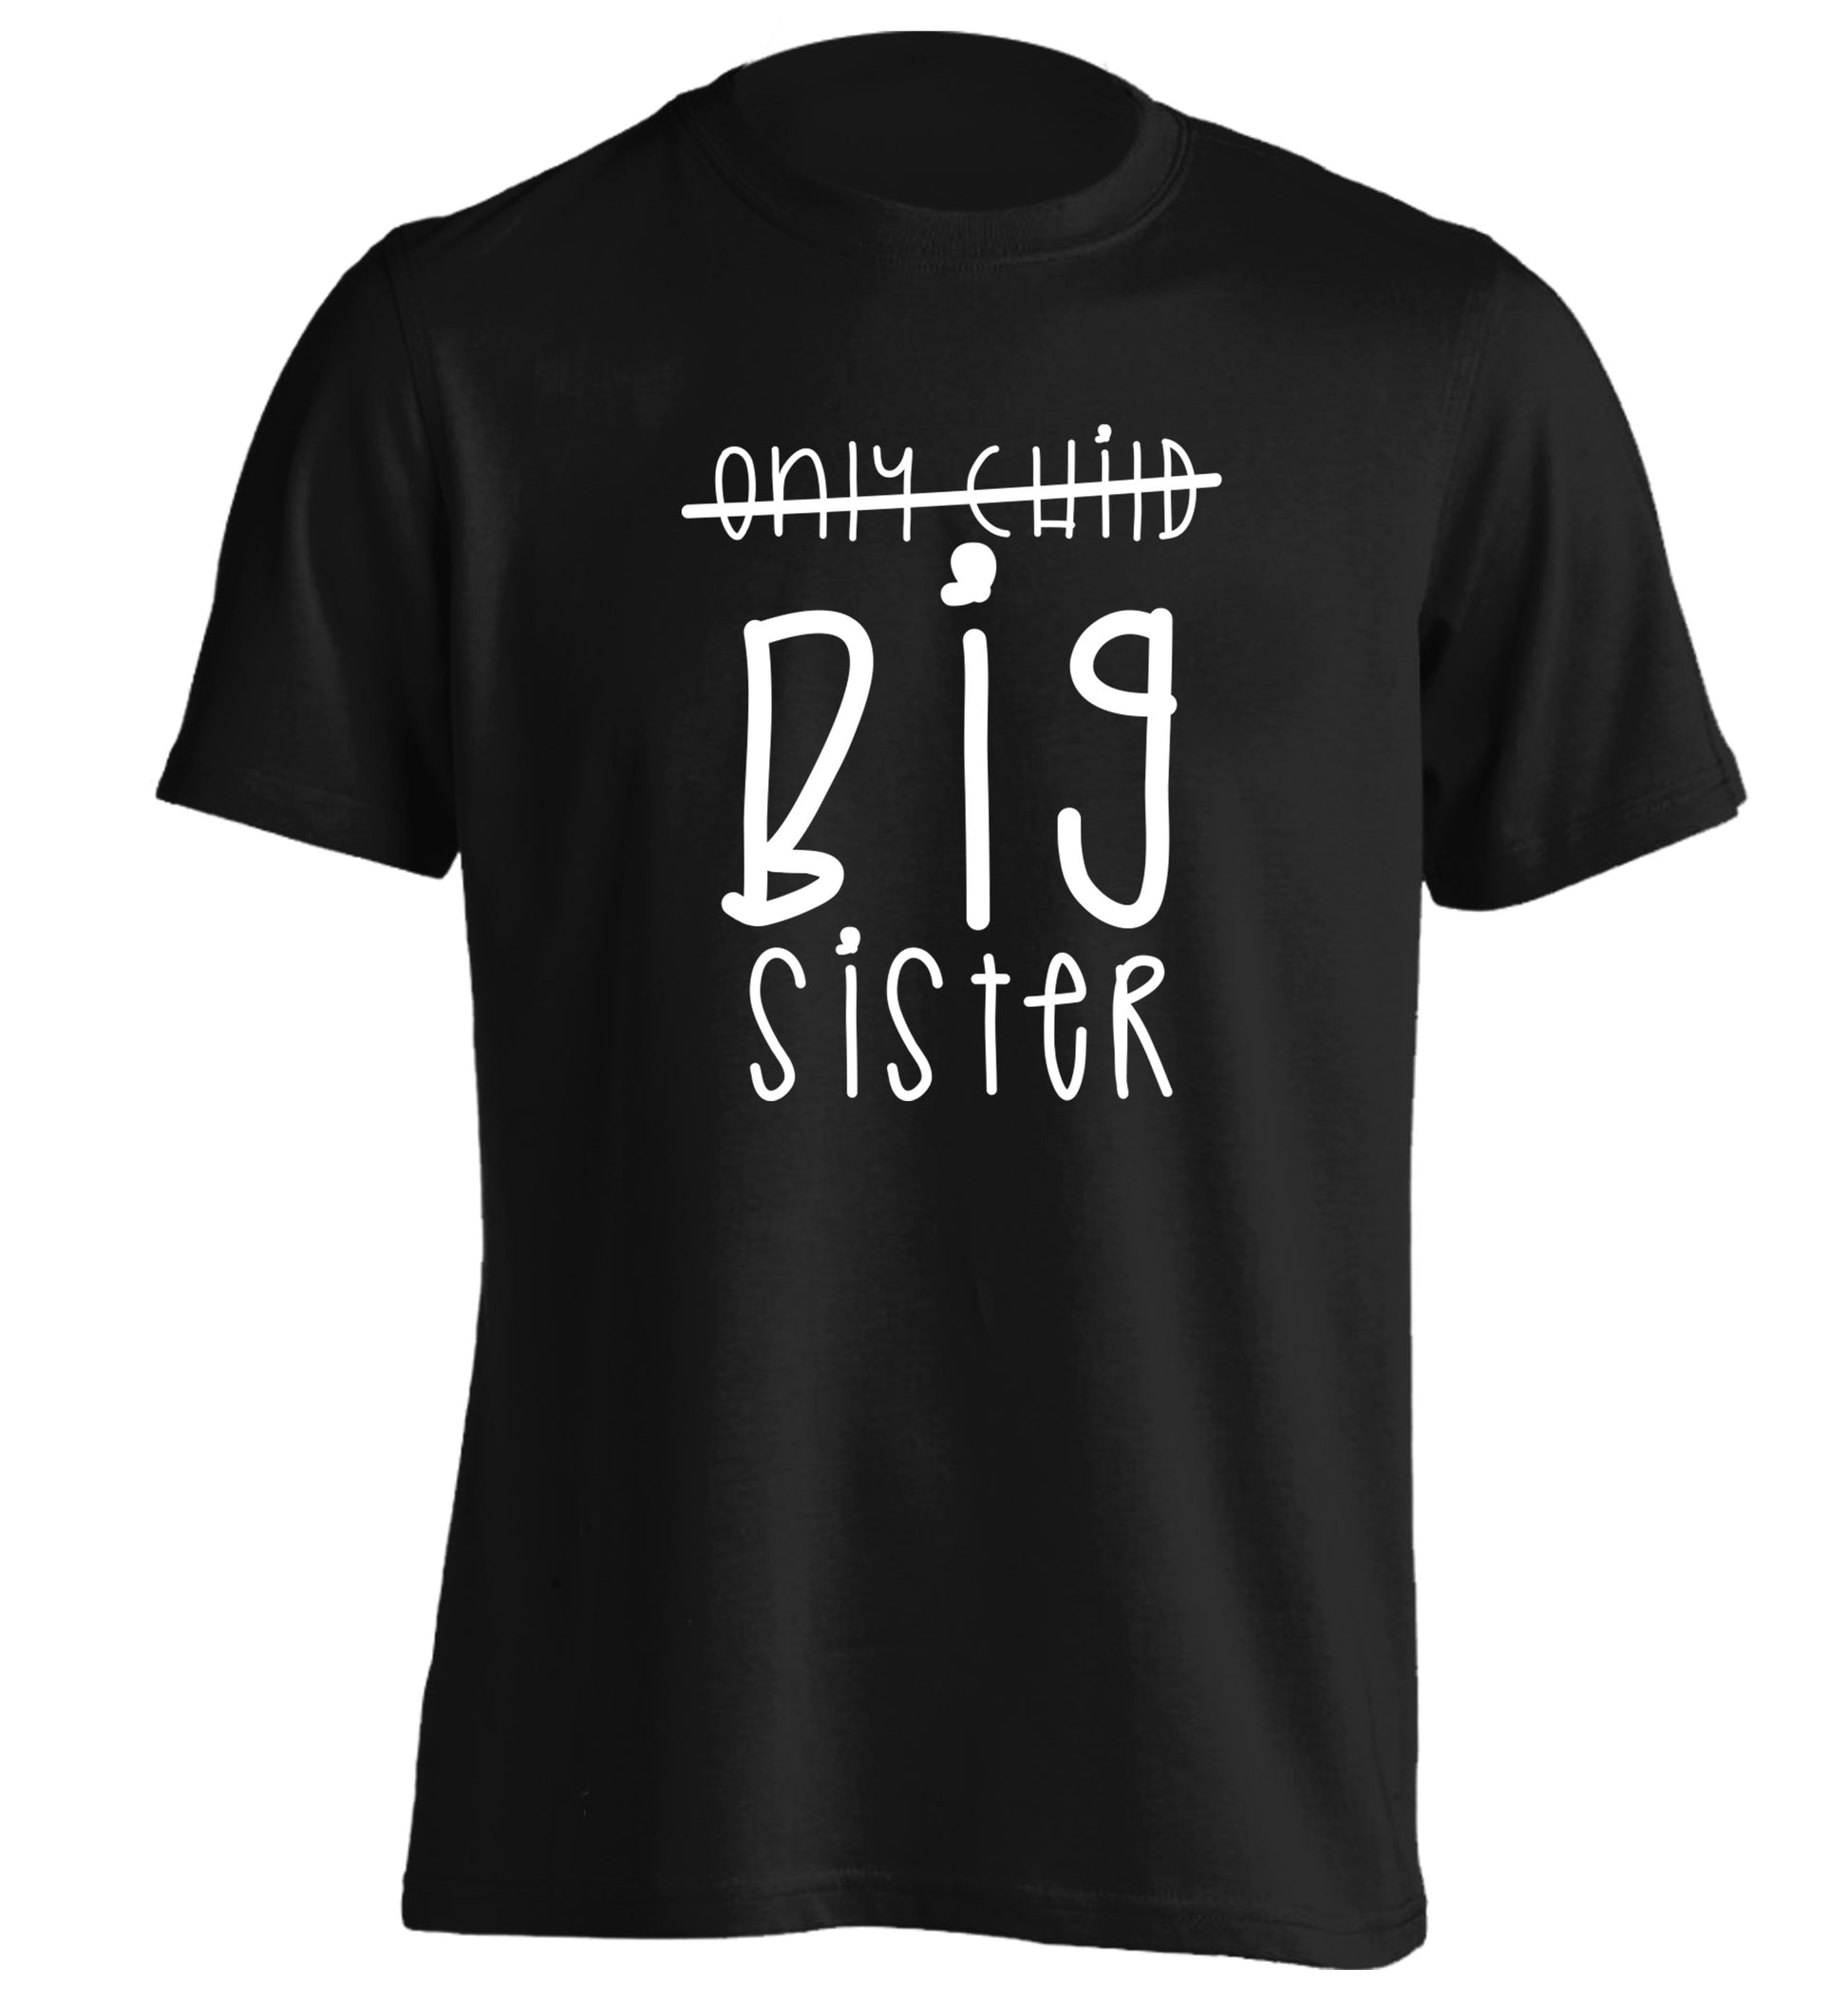 Only child big sister adults unisex black Tshirt 2XL